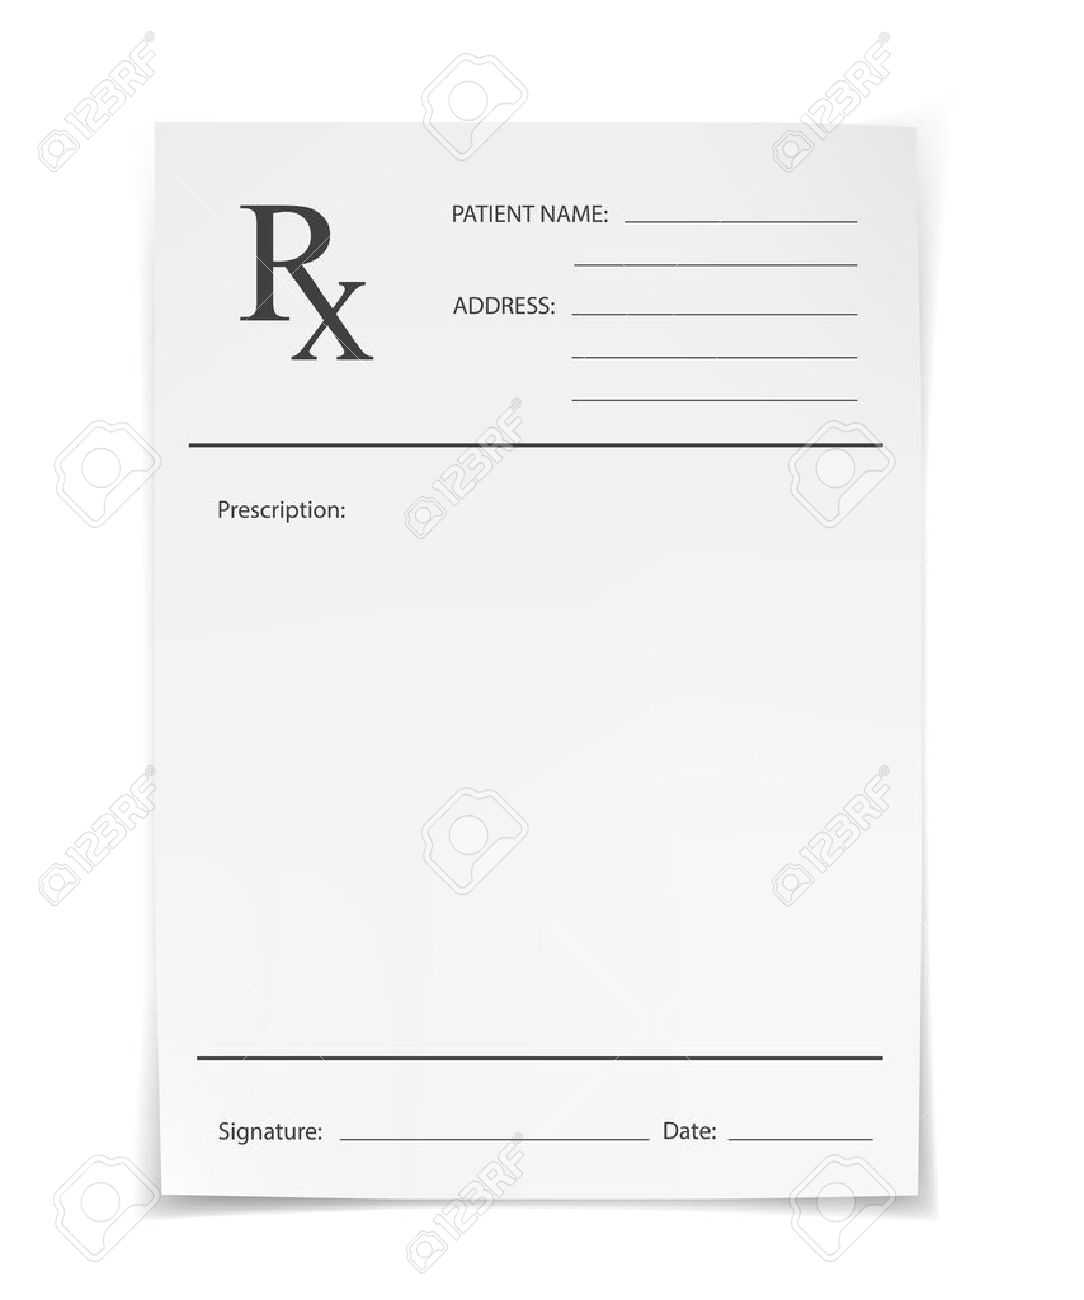 Blank Rx Prescription Form Isolated On White Background Regarding Blank Prescription Form Template